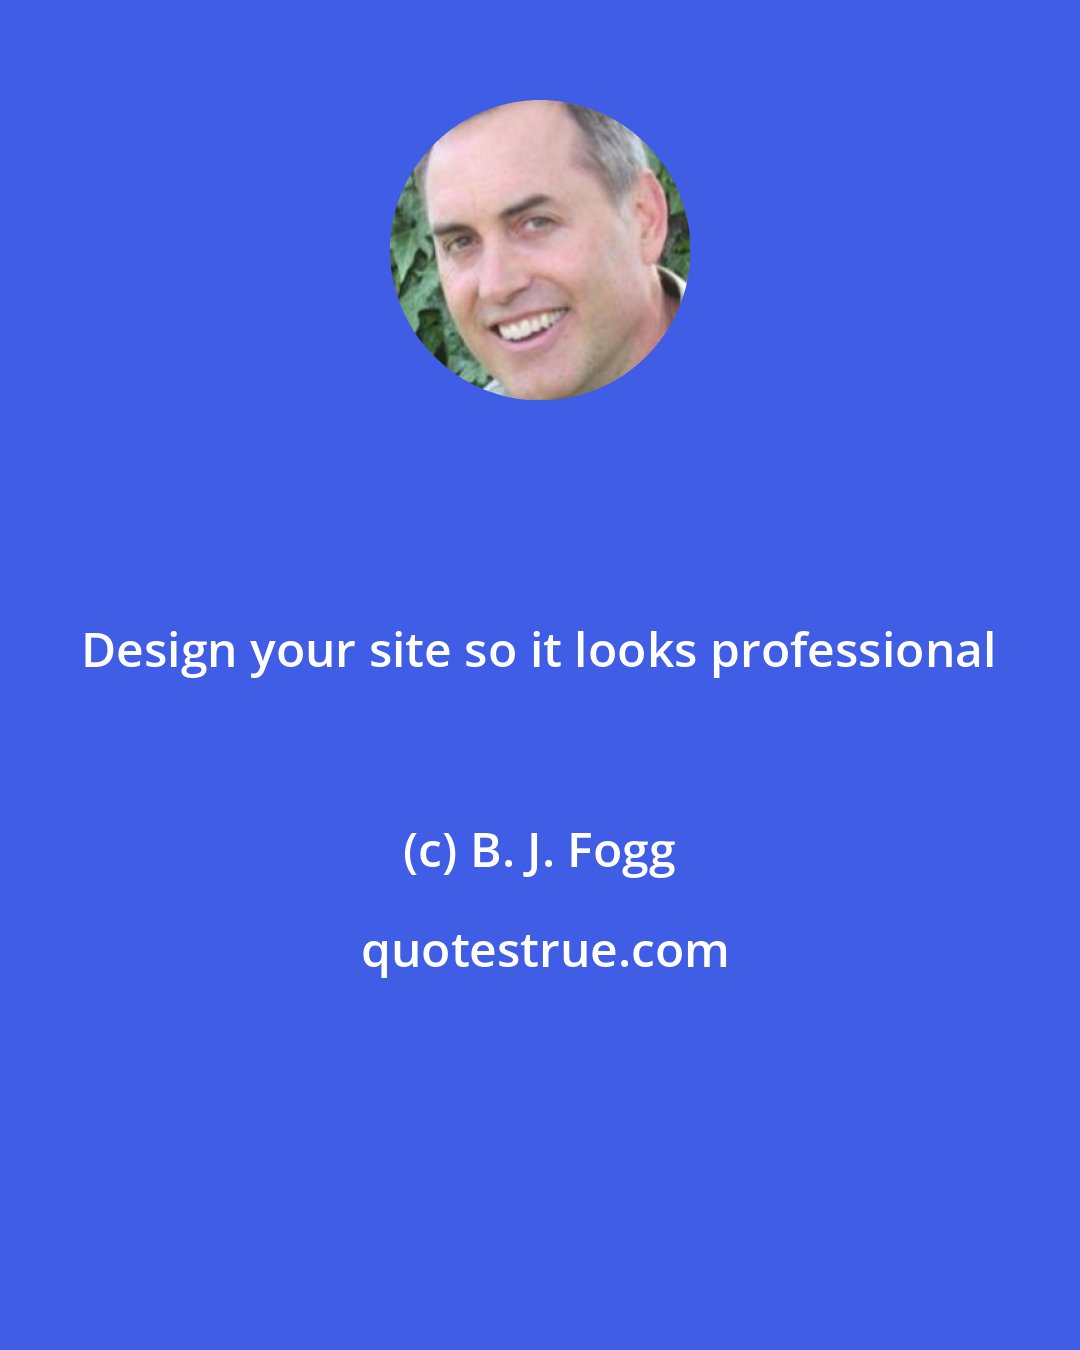 B. J. Fogg: Design your site so it looks professional